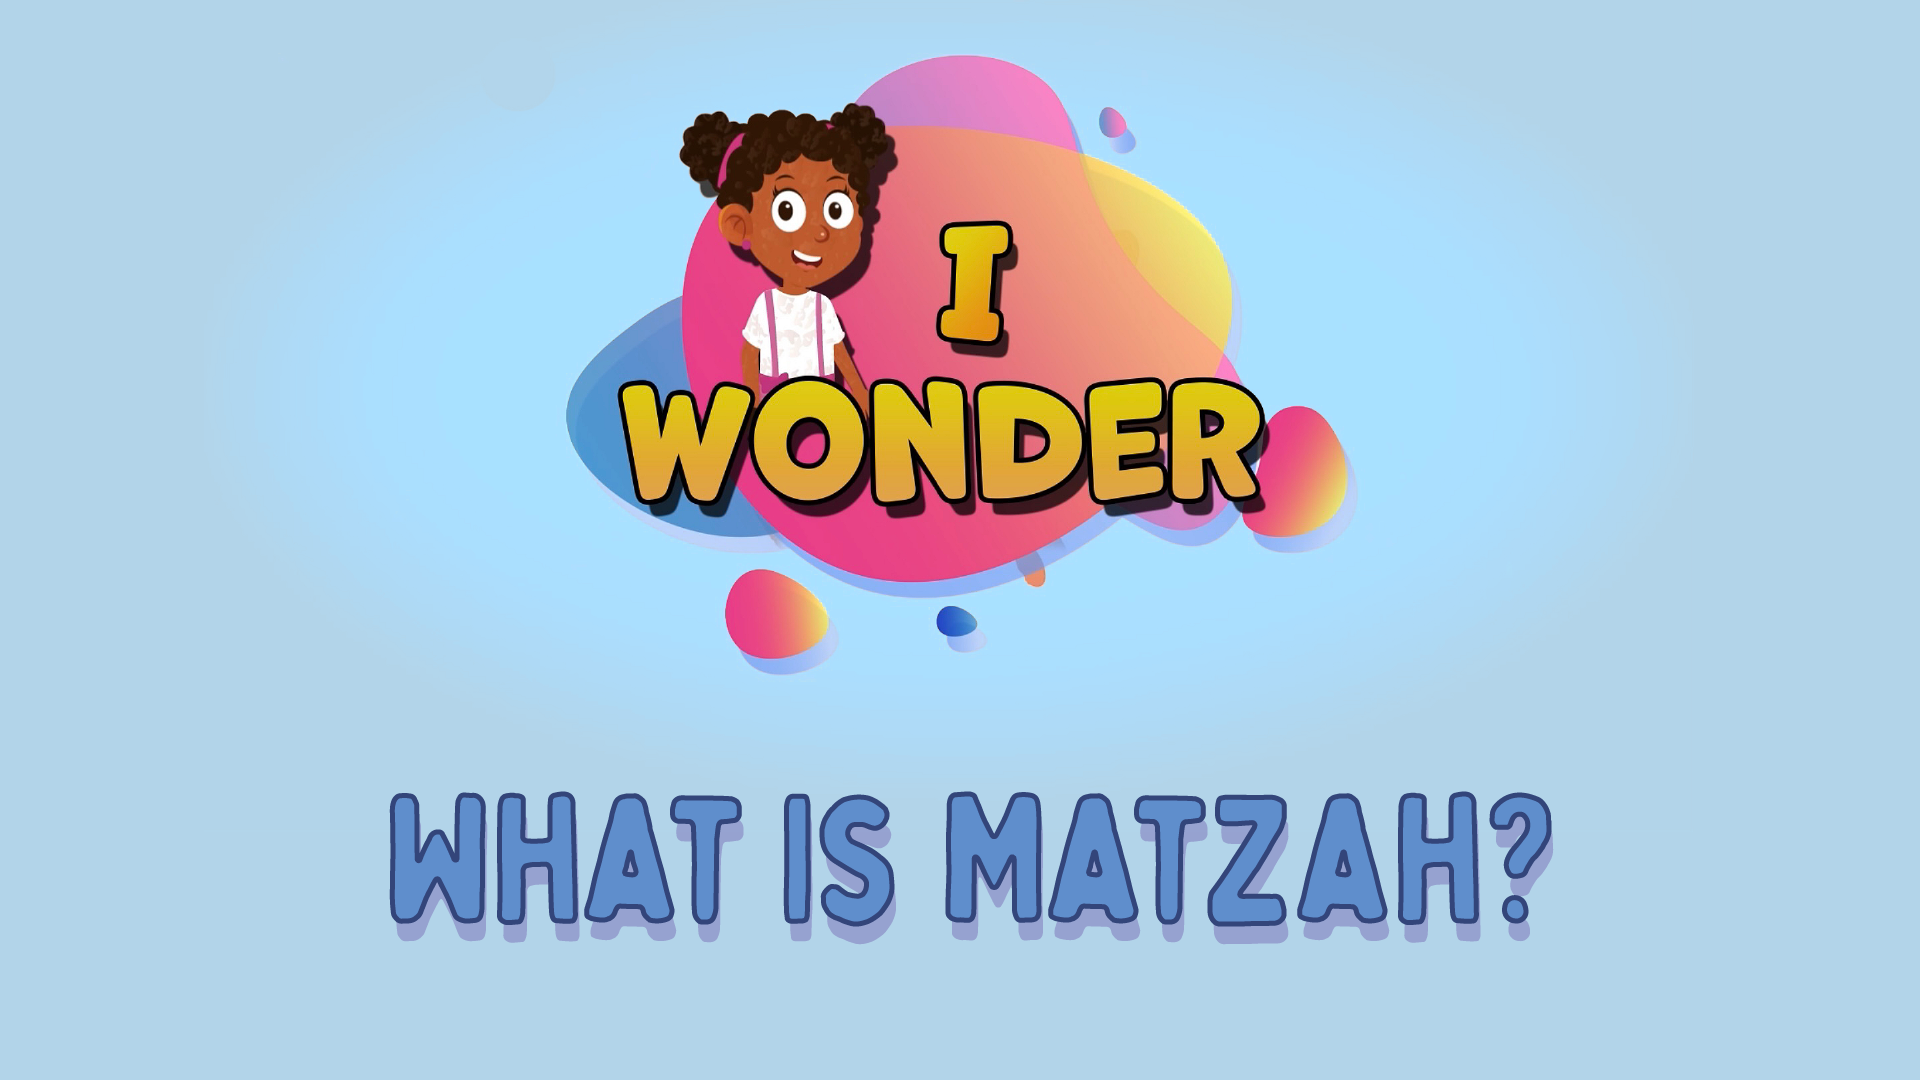 What Is Matzah?